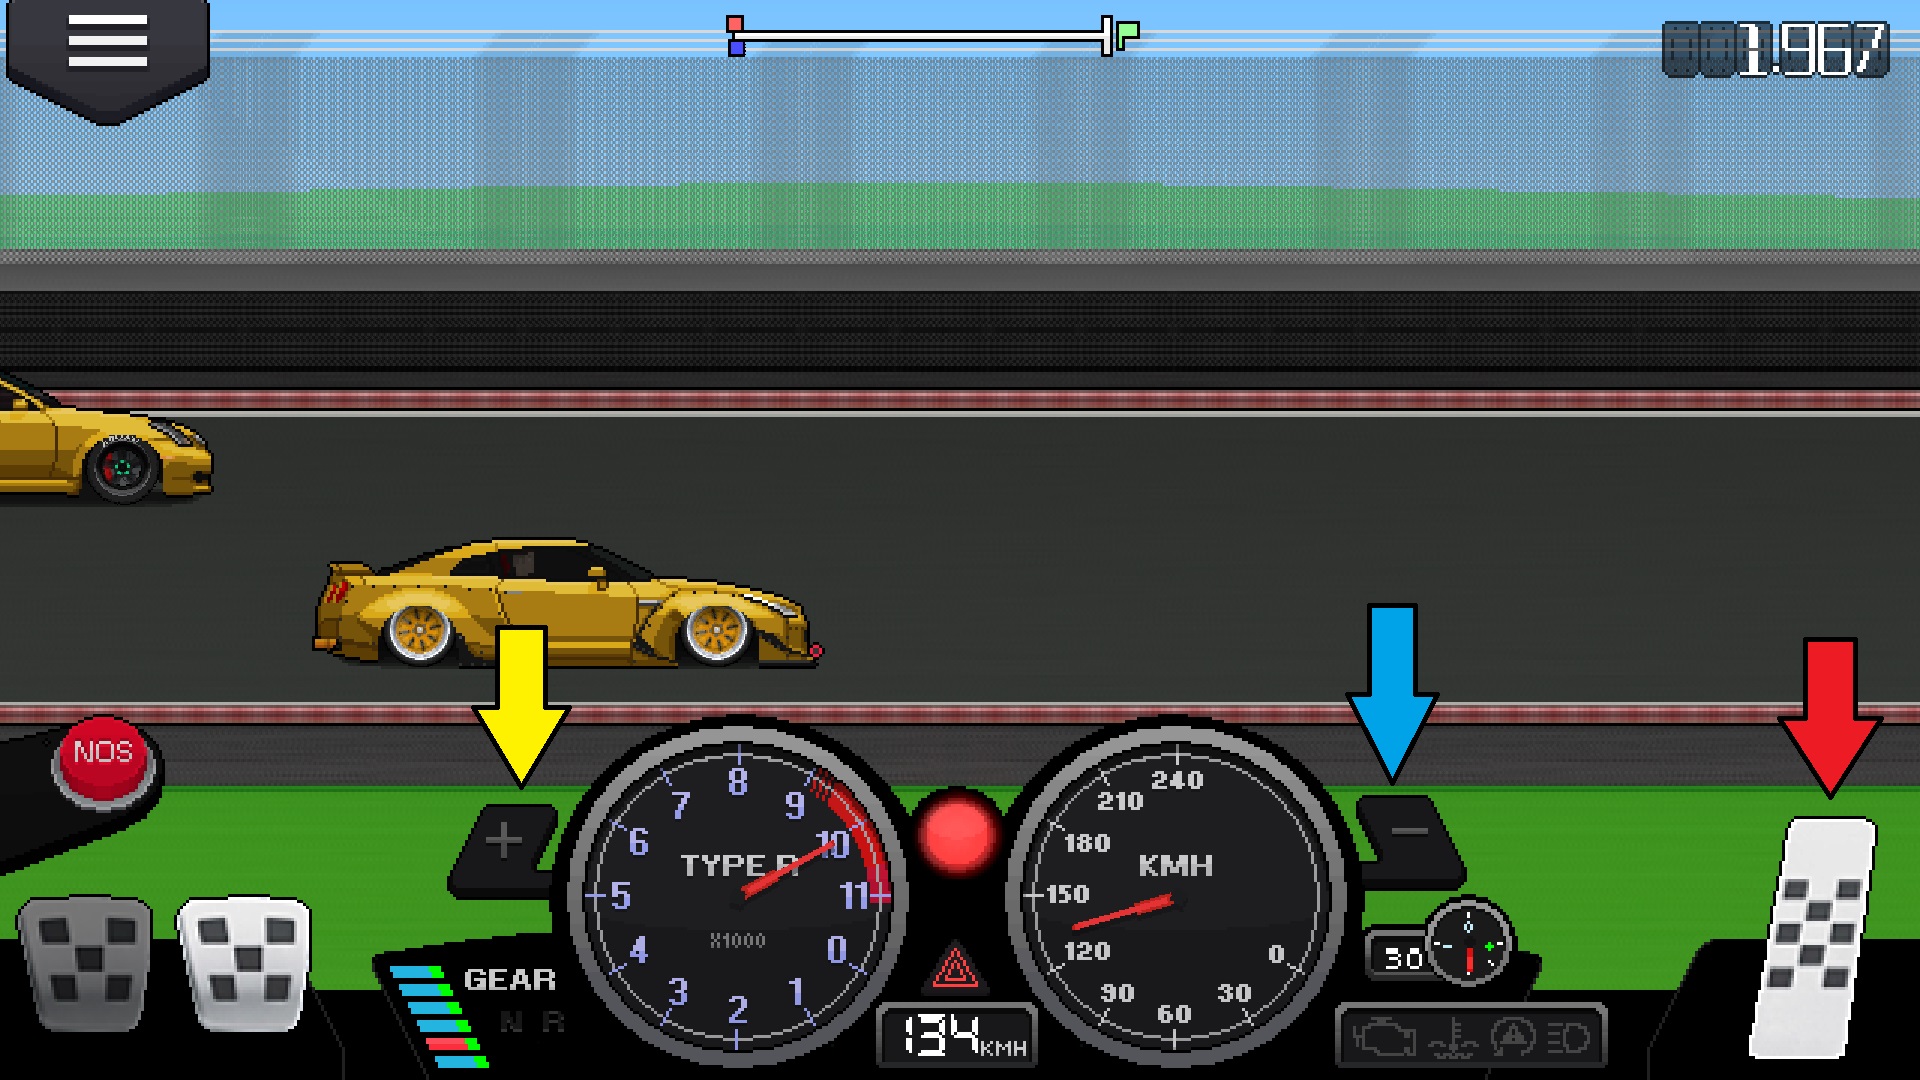 pixel car racer unlock story mode